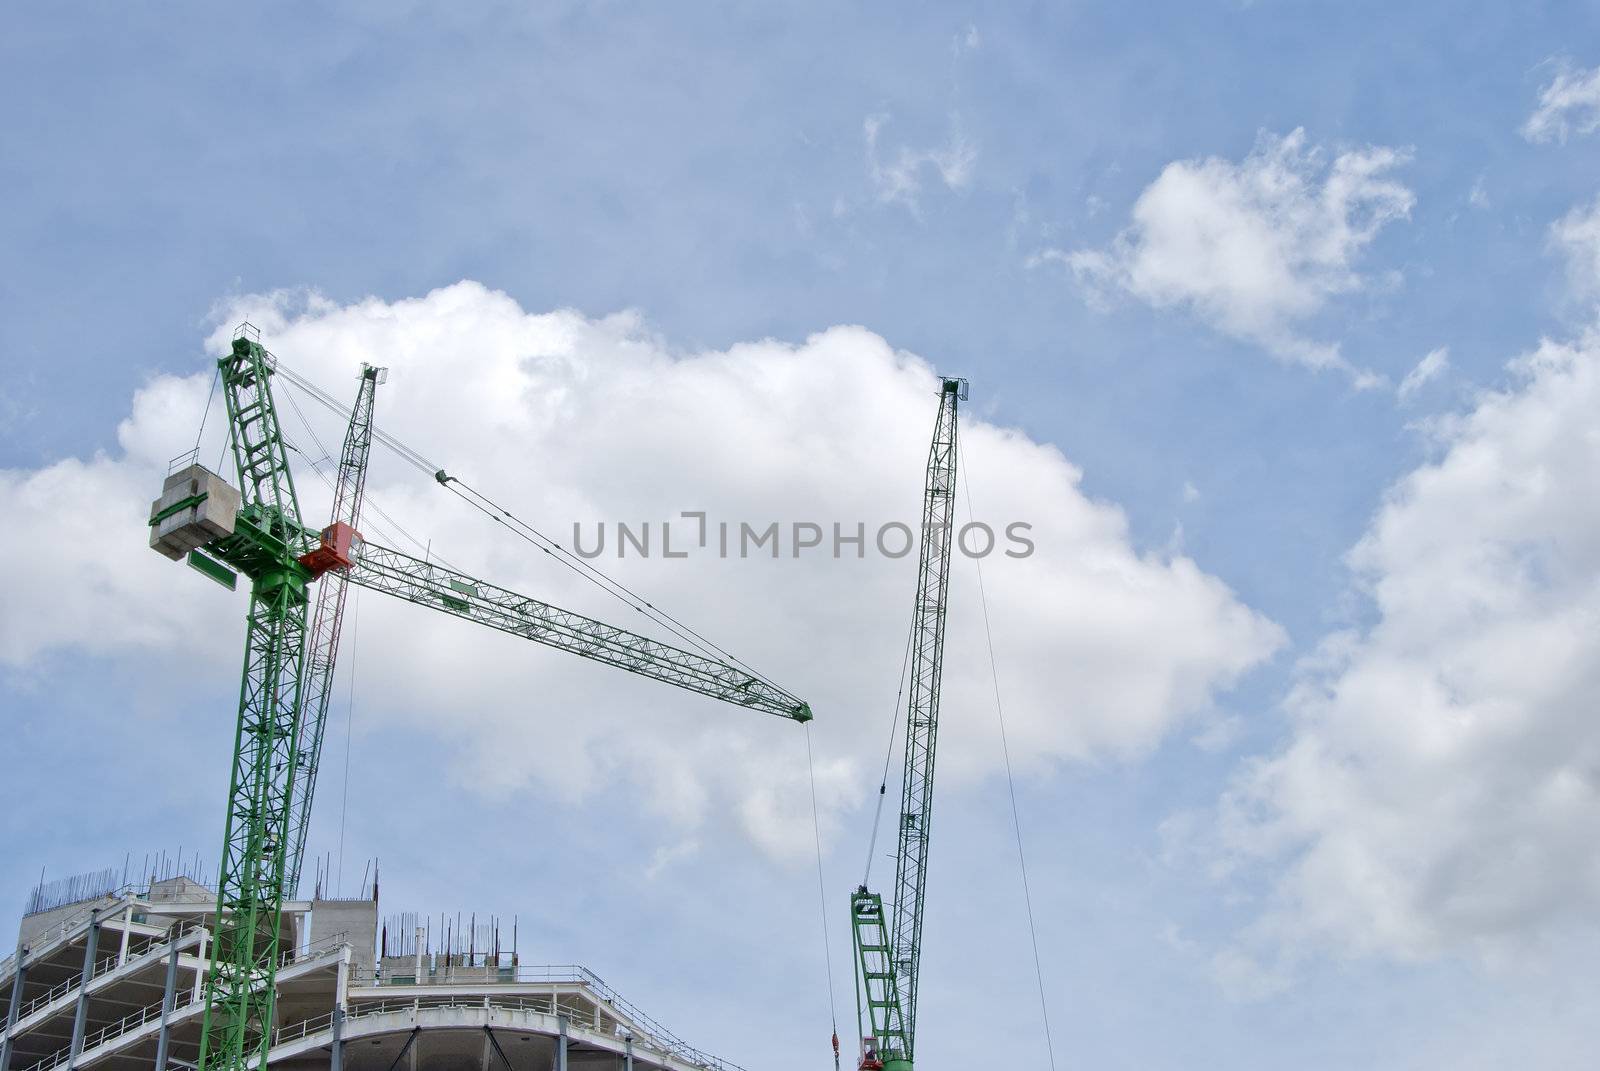 Green Heavy Lift Cranes by d40xboy